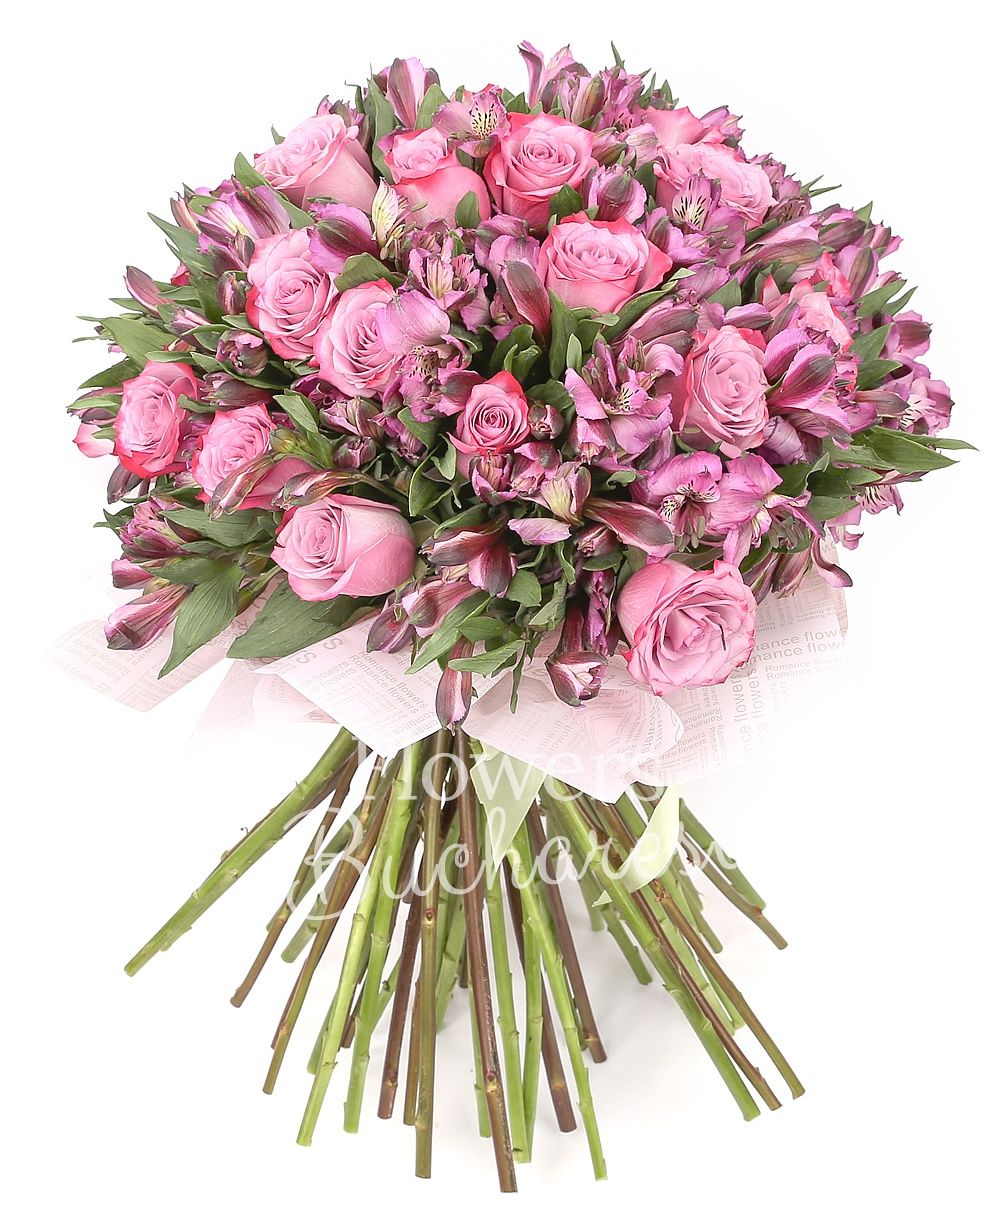 20 pink alstroemeria, 15 purple roses